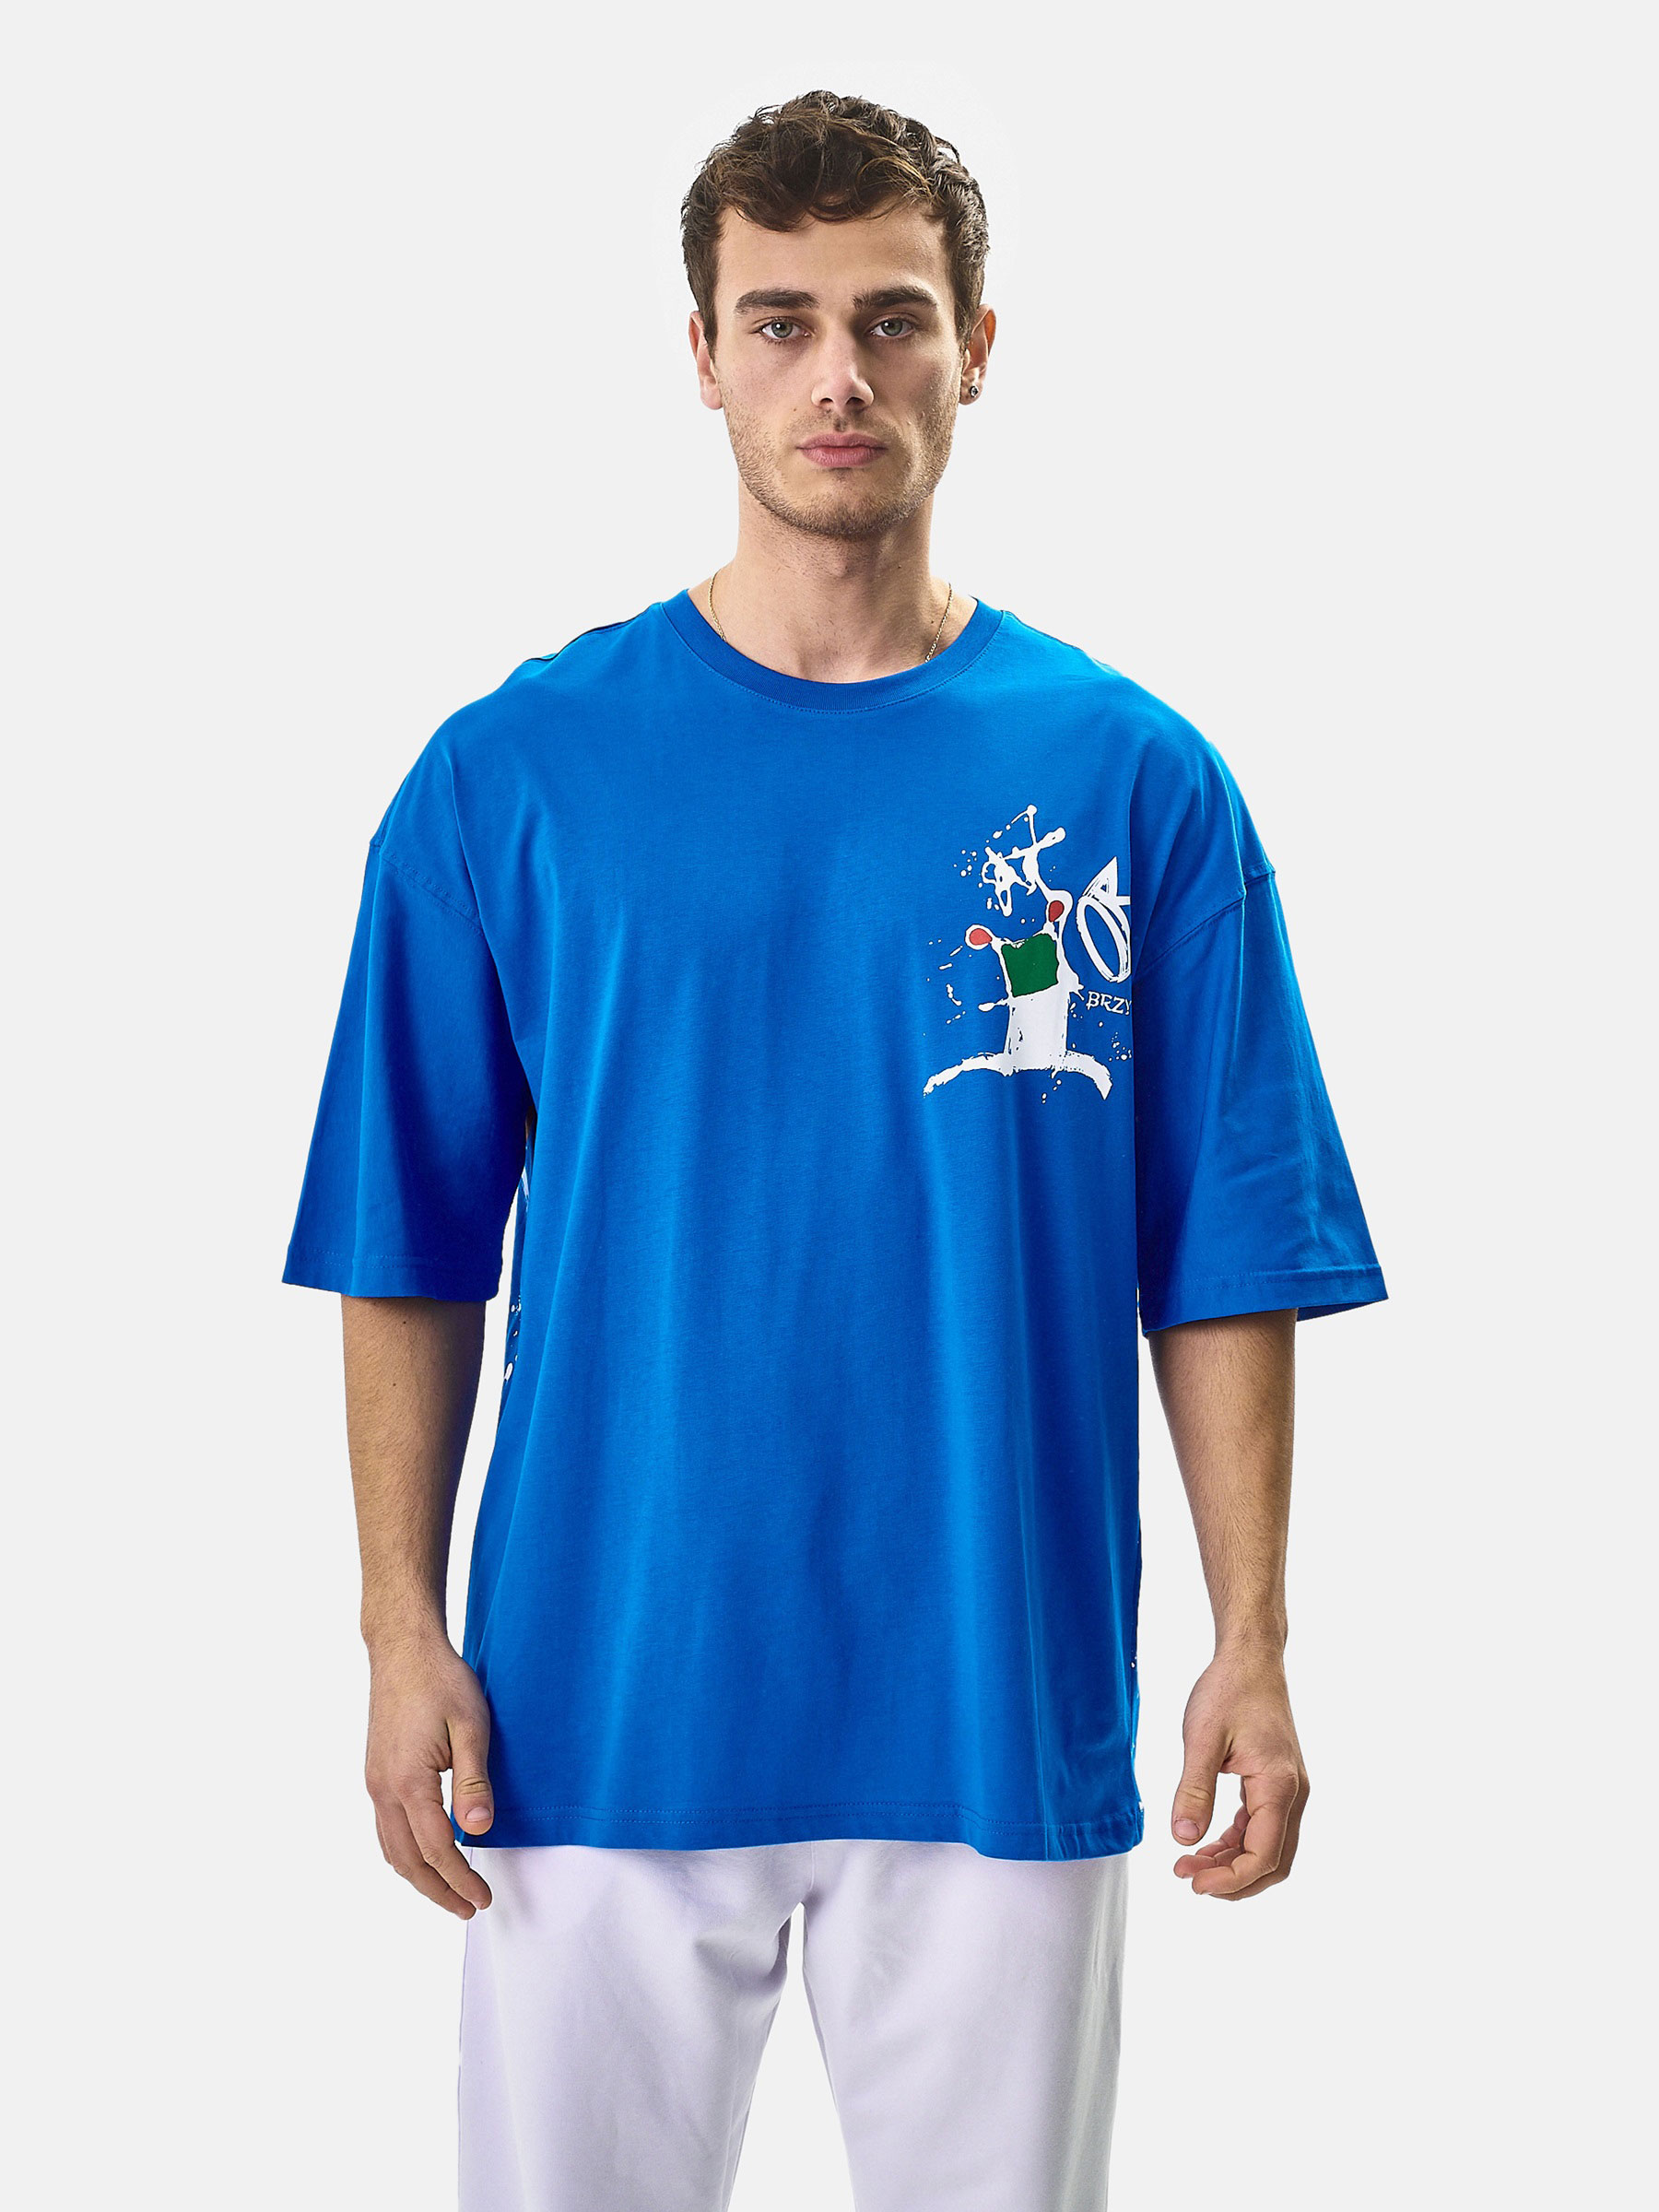 WAM Denim Brodie Royal blue T-Shirt -